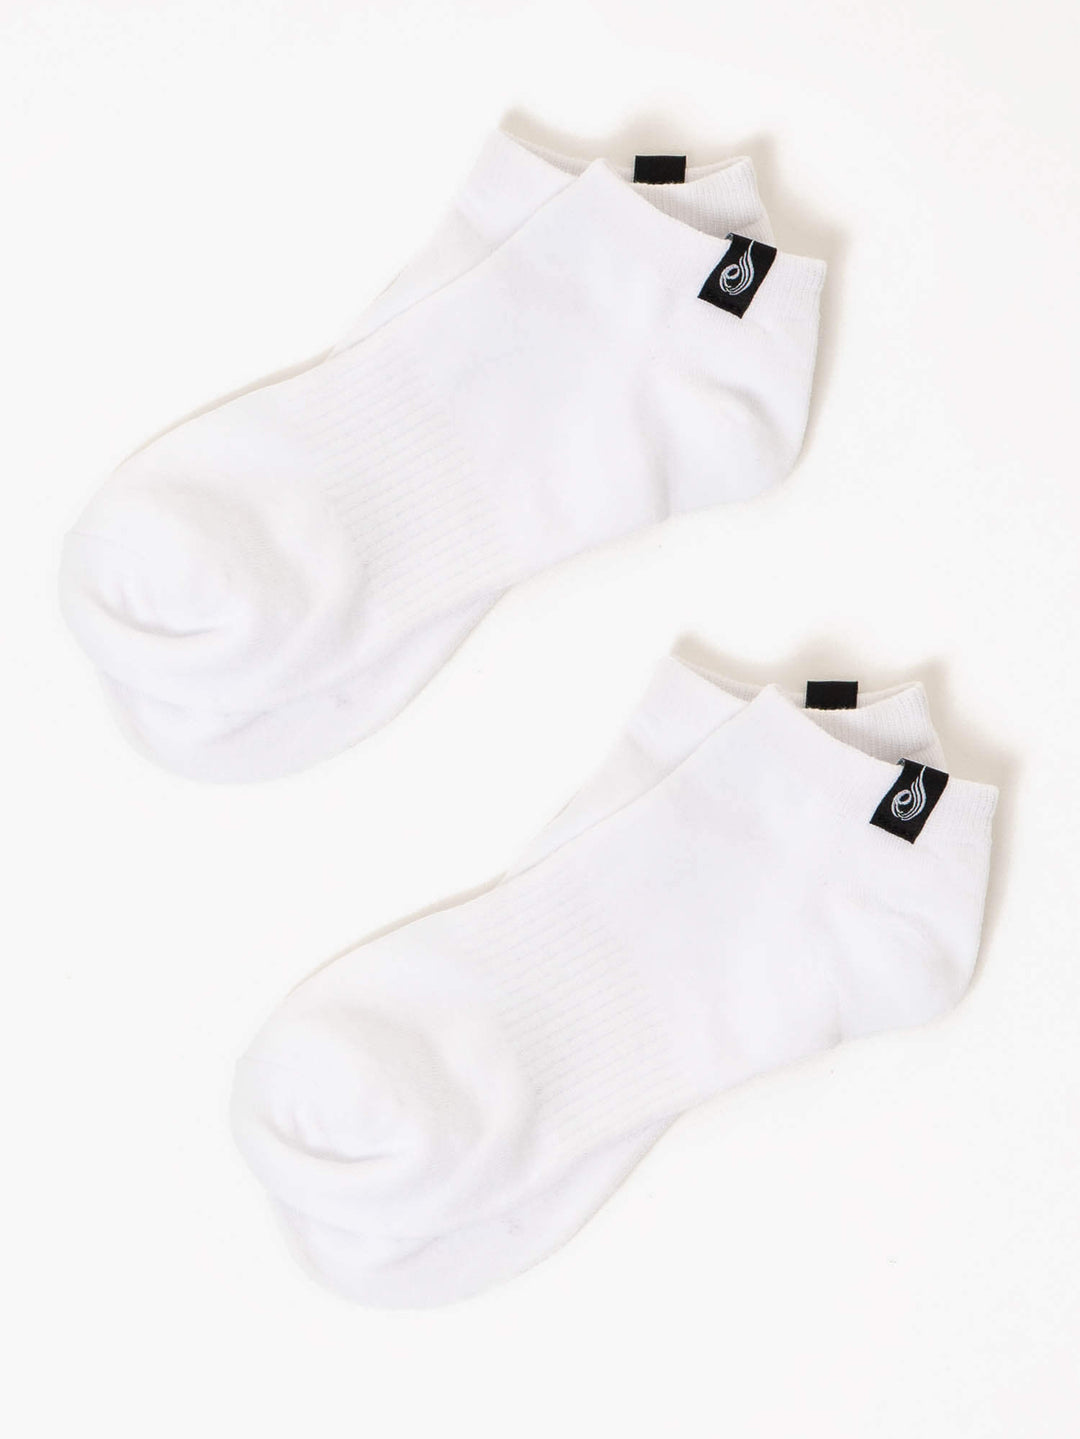 Training Socks - White Accessories Ryderwear 